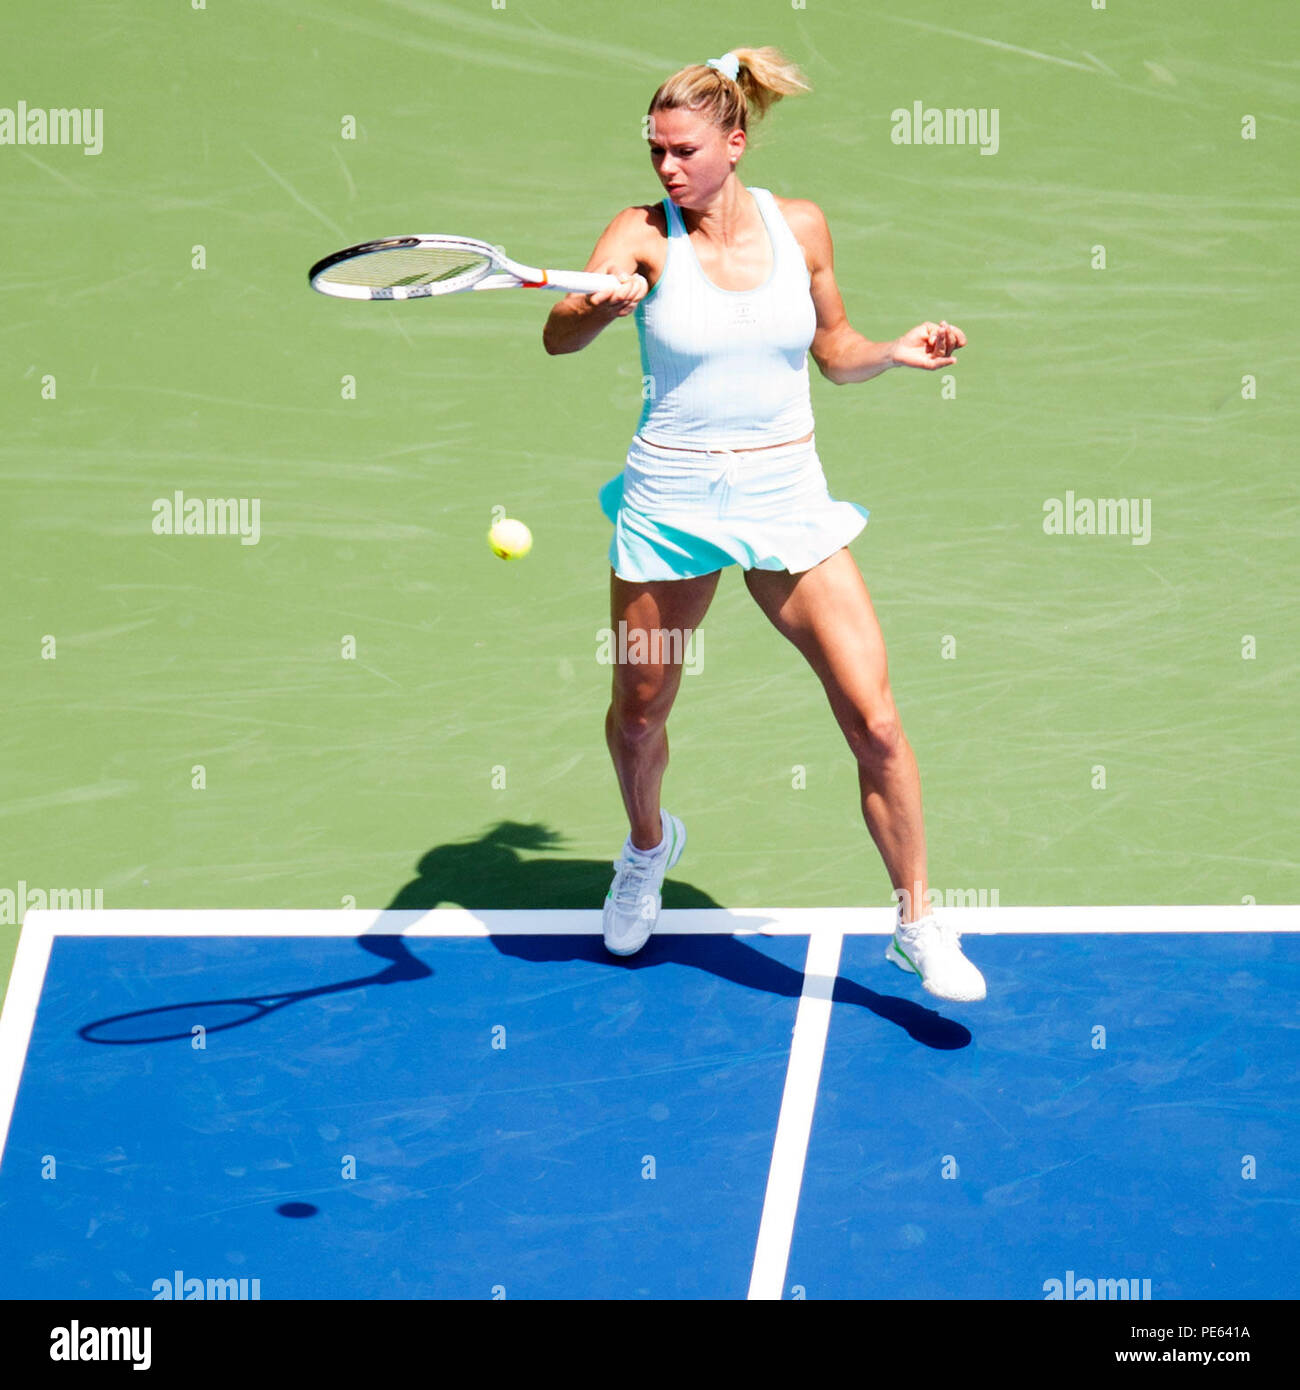 Ohio, USA. August 12, 2018: Camila Giorgi (ITA) hits the ball back to Viktoria Kumova (SVK) at the Western Southern Open in Mason, Ohio, USA. Brent Clark/Alamy Live News Stock Photo